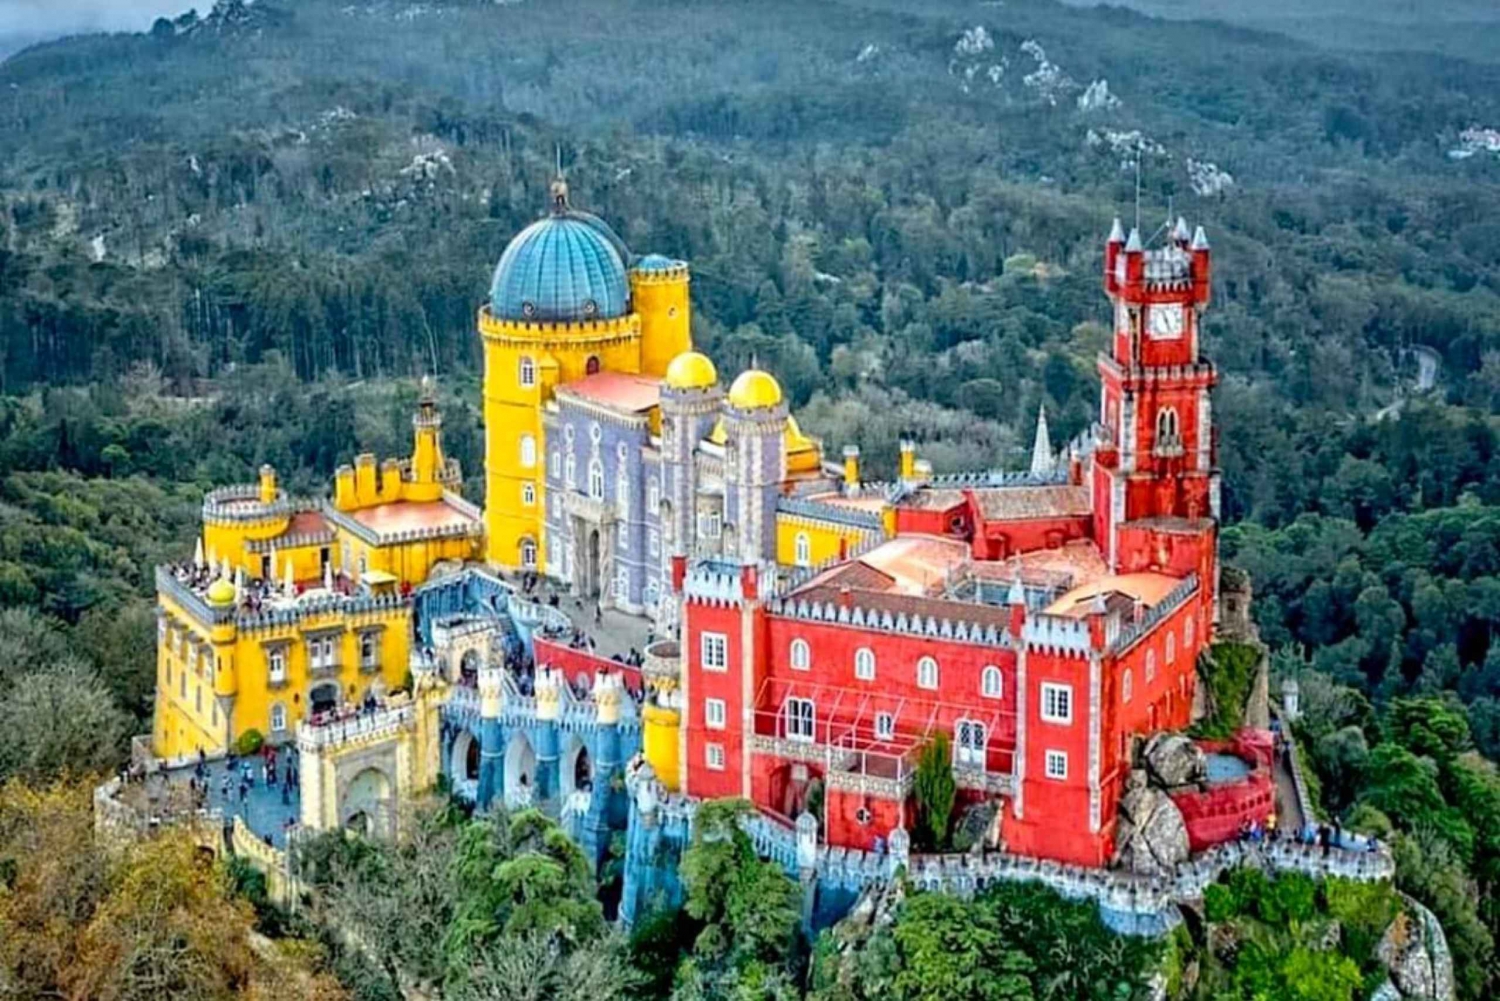 Sintra: Pena Palace. Moorish Castle. Regaleira. & Monserrate